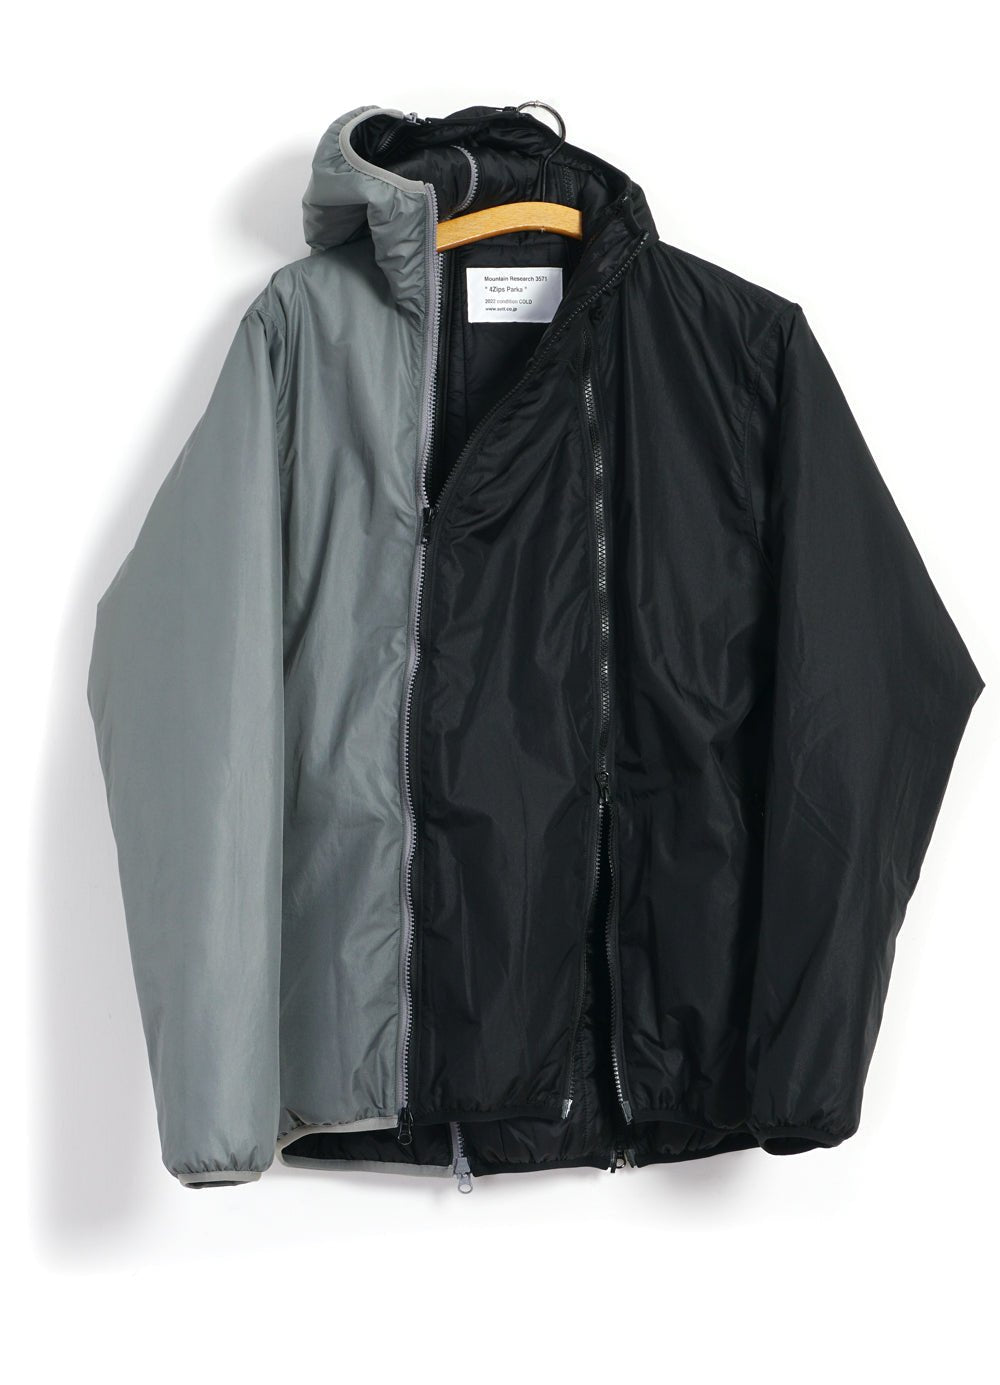 MOUNTAIN RESEARCH - 4 ZIPS PARKA | Black/Grey - HANSEN Garments